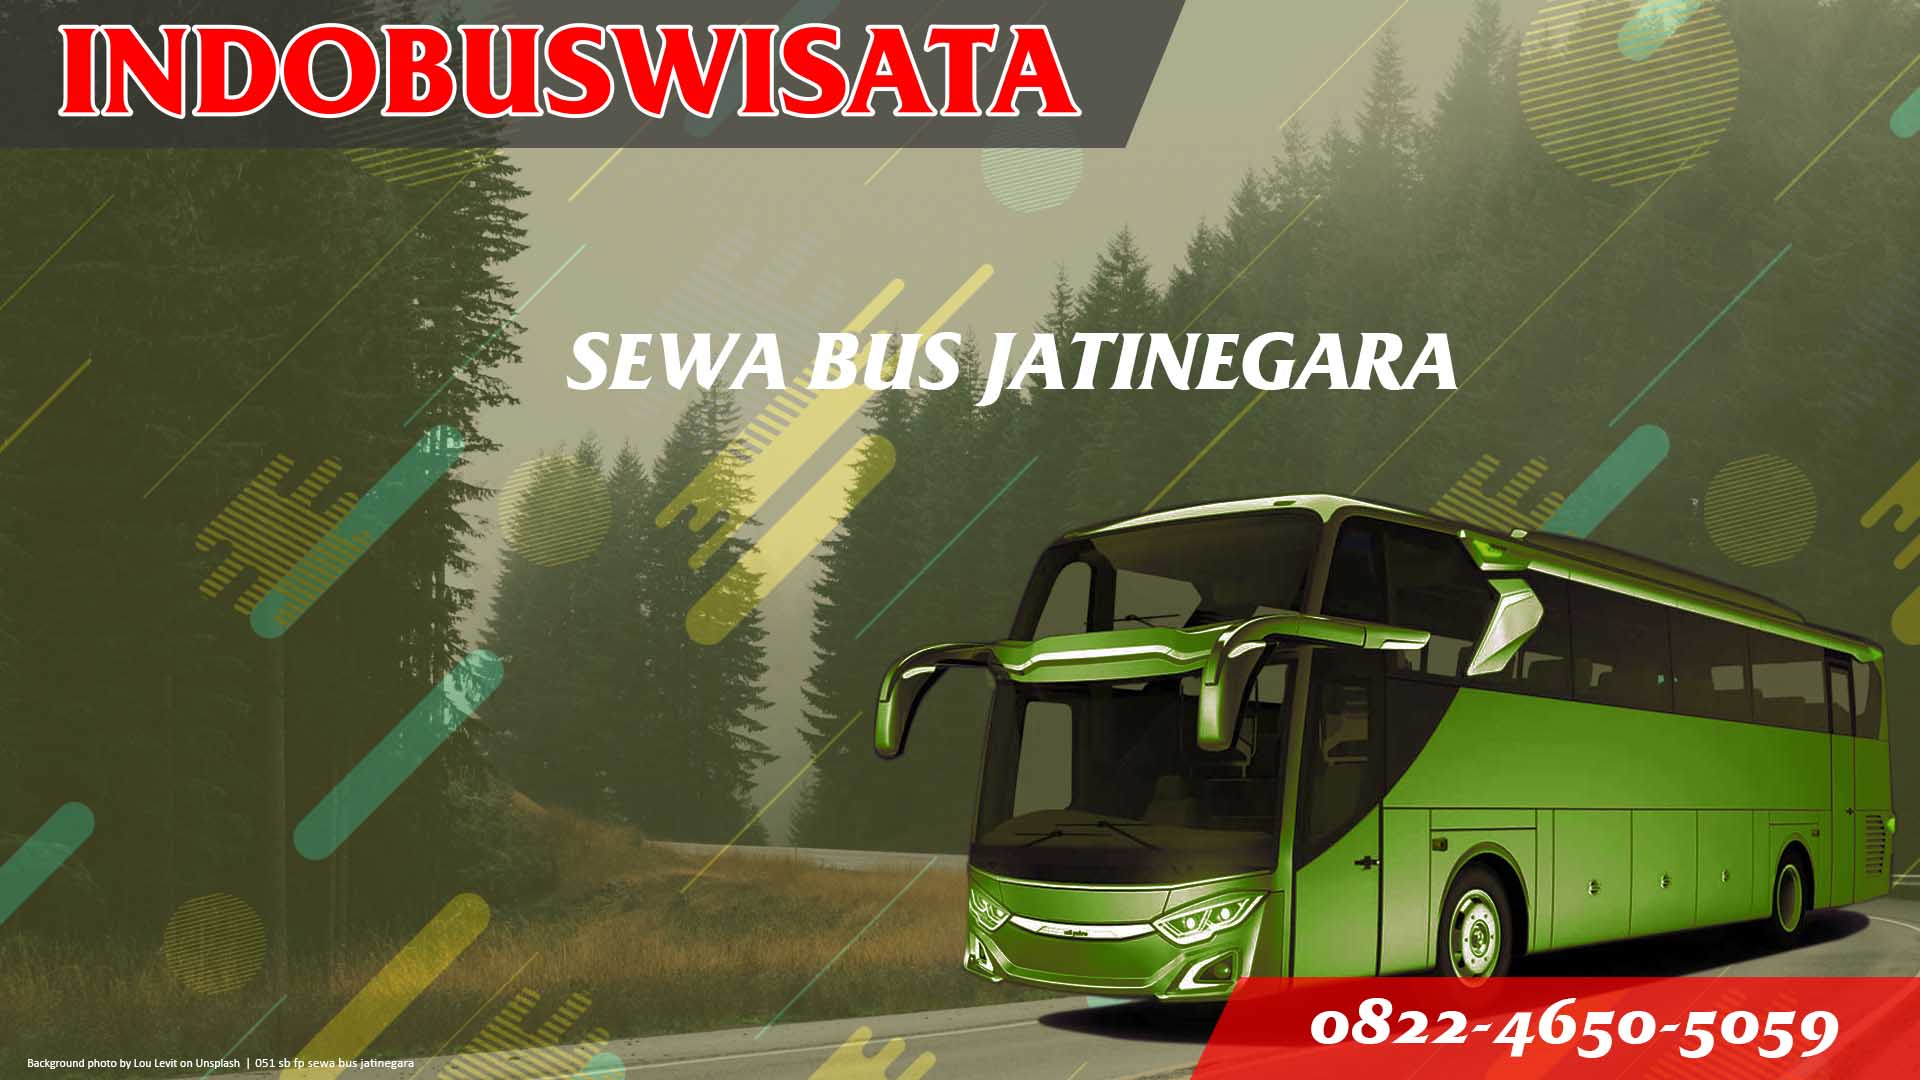 051 Sb Fp Sewa Bus Jatinegara Jb 3 Hdd Indobuswisata